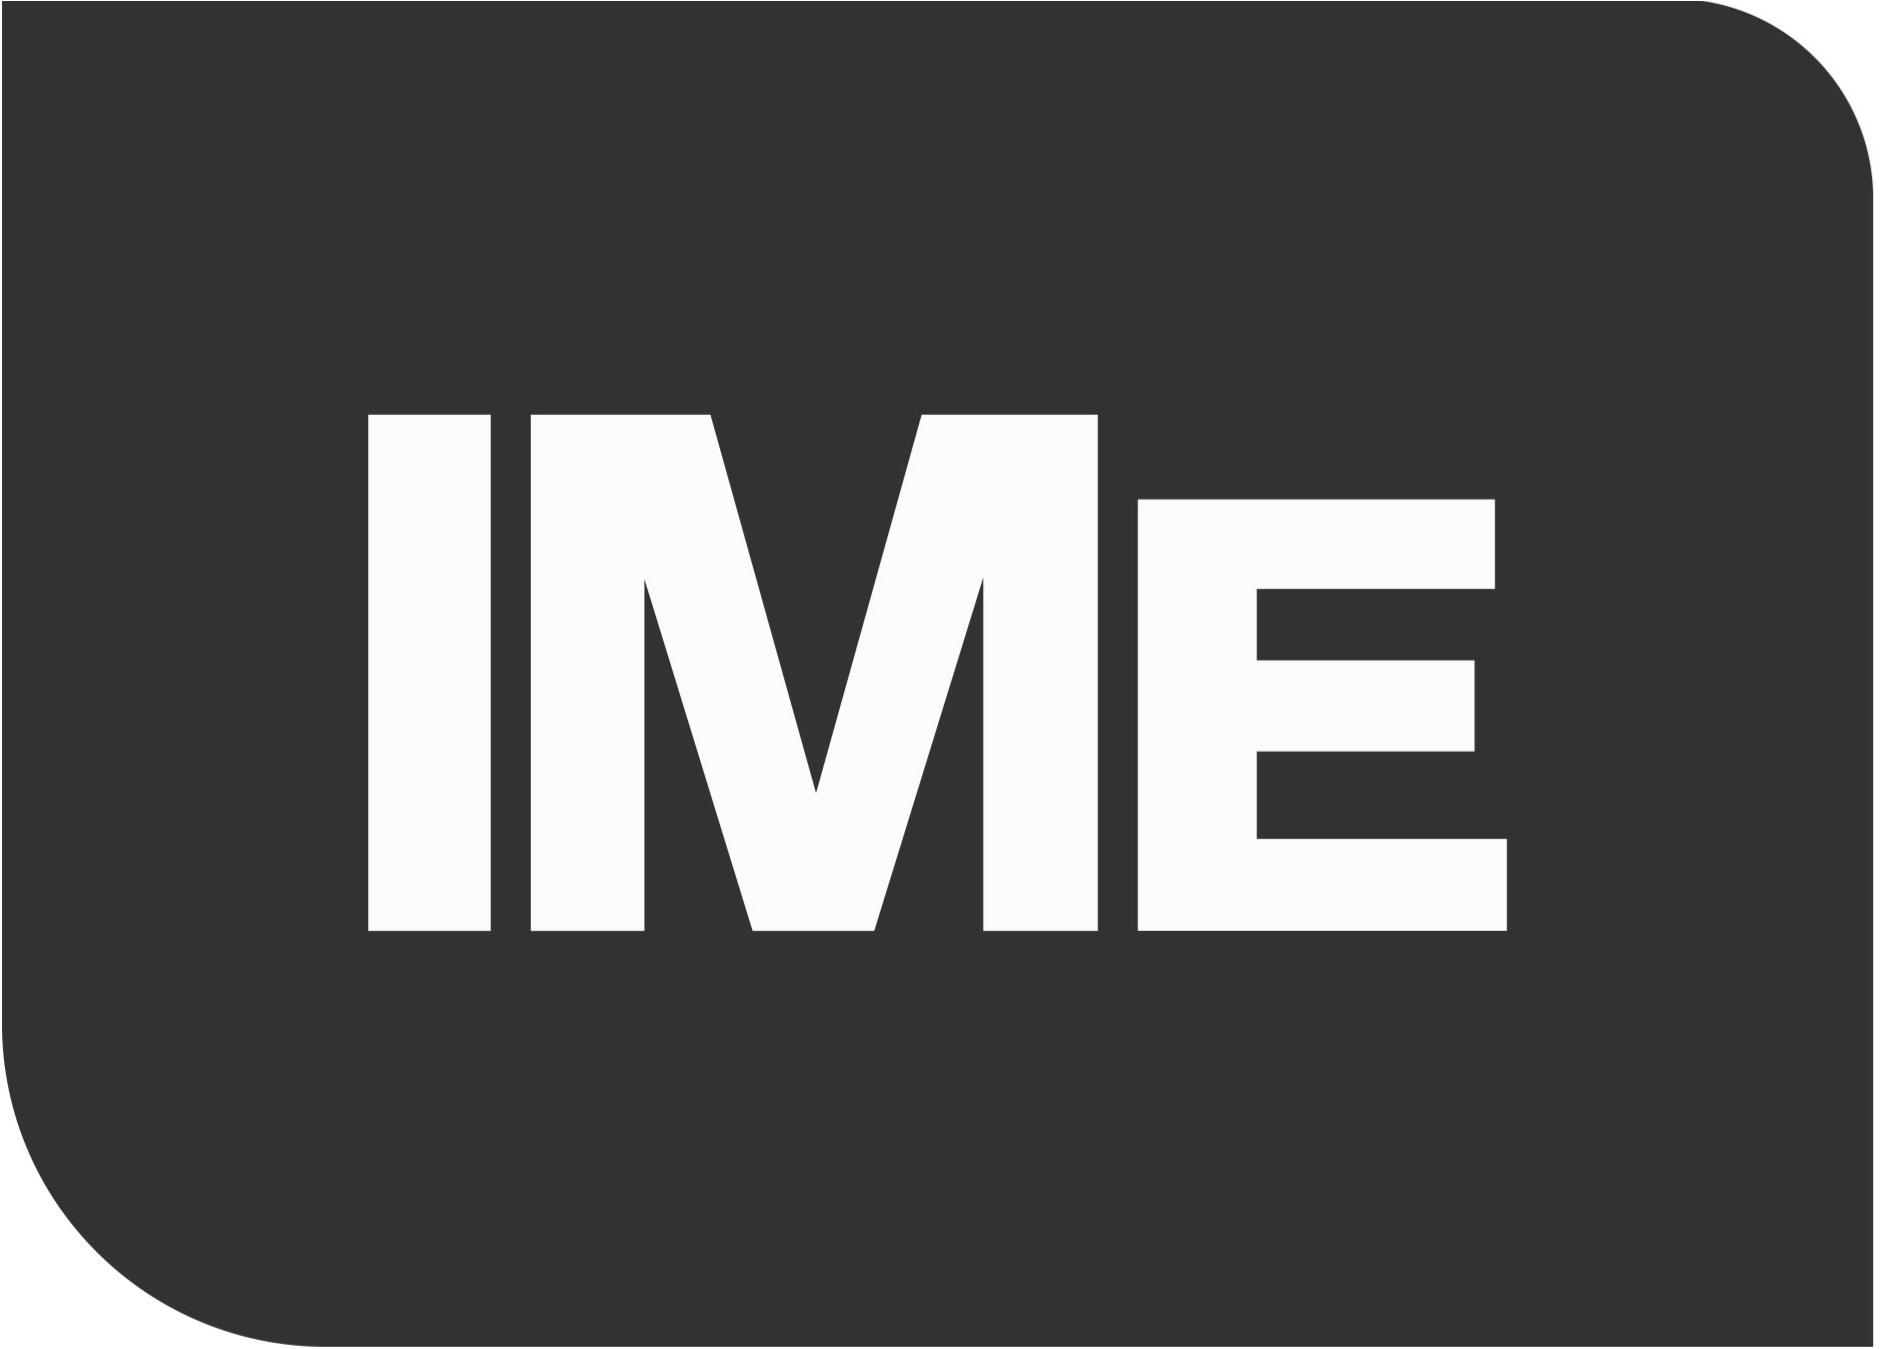 IME - Independent Medical Examinations, Inc. Trademark Registration